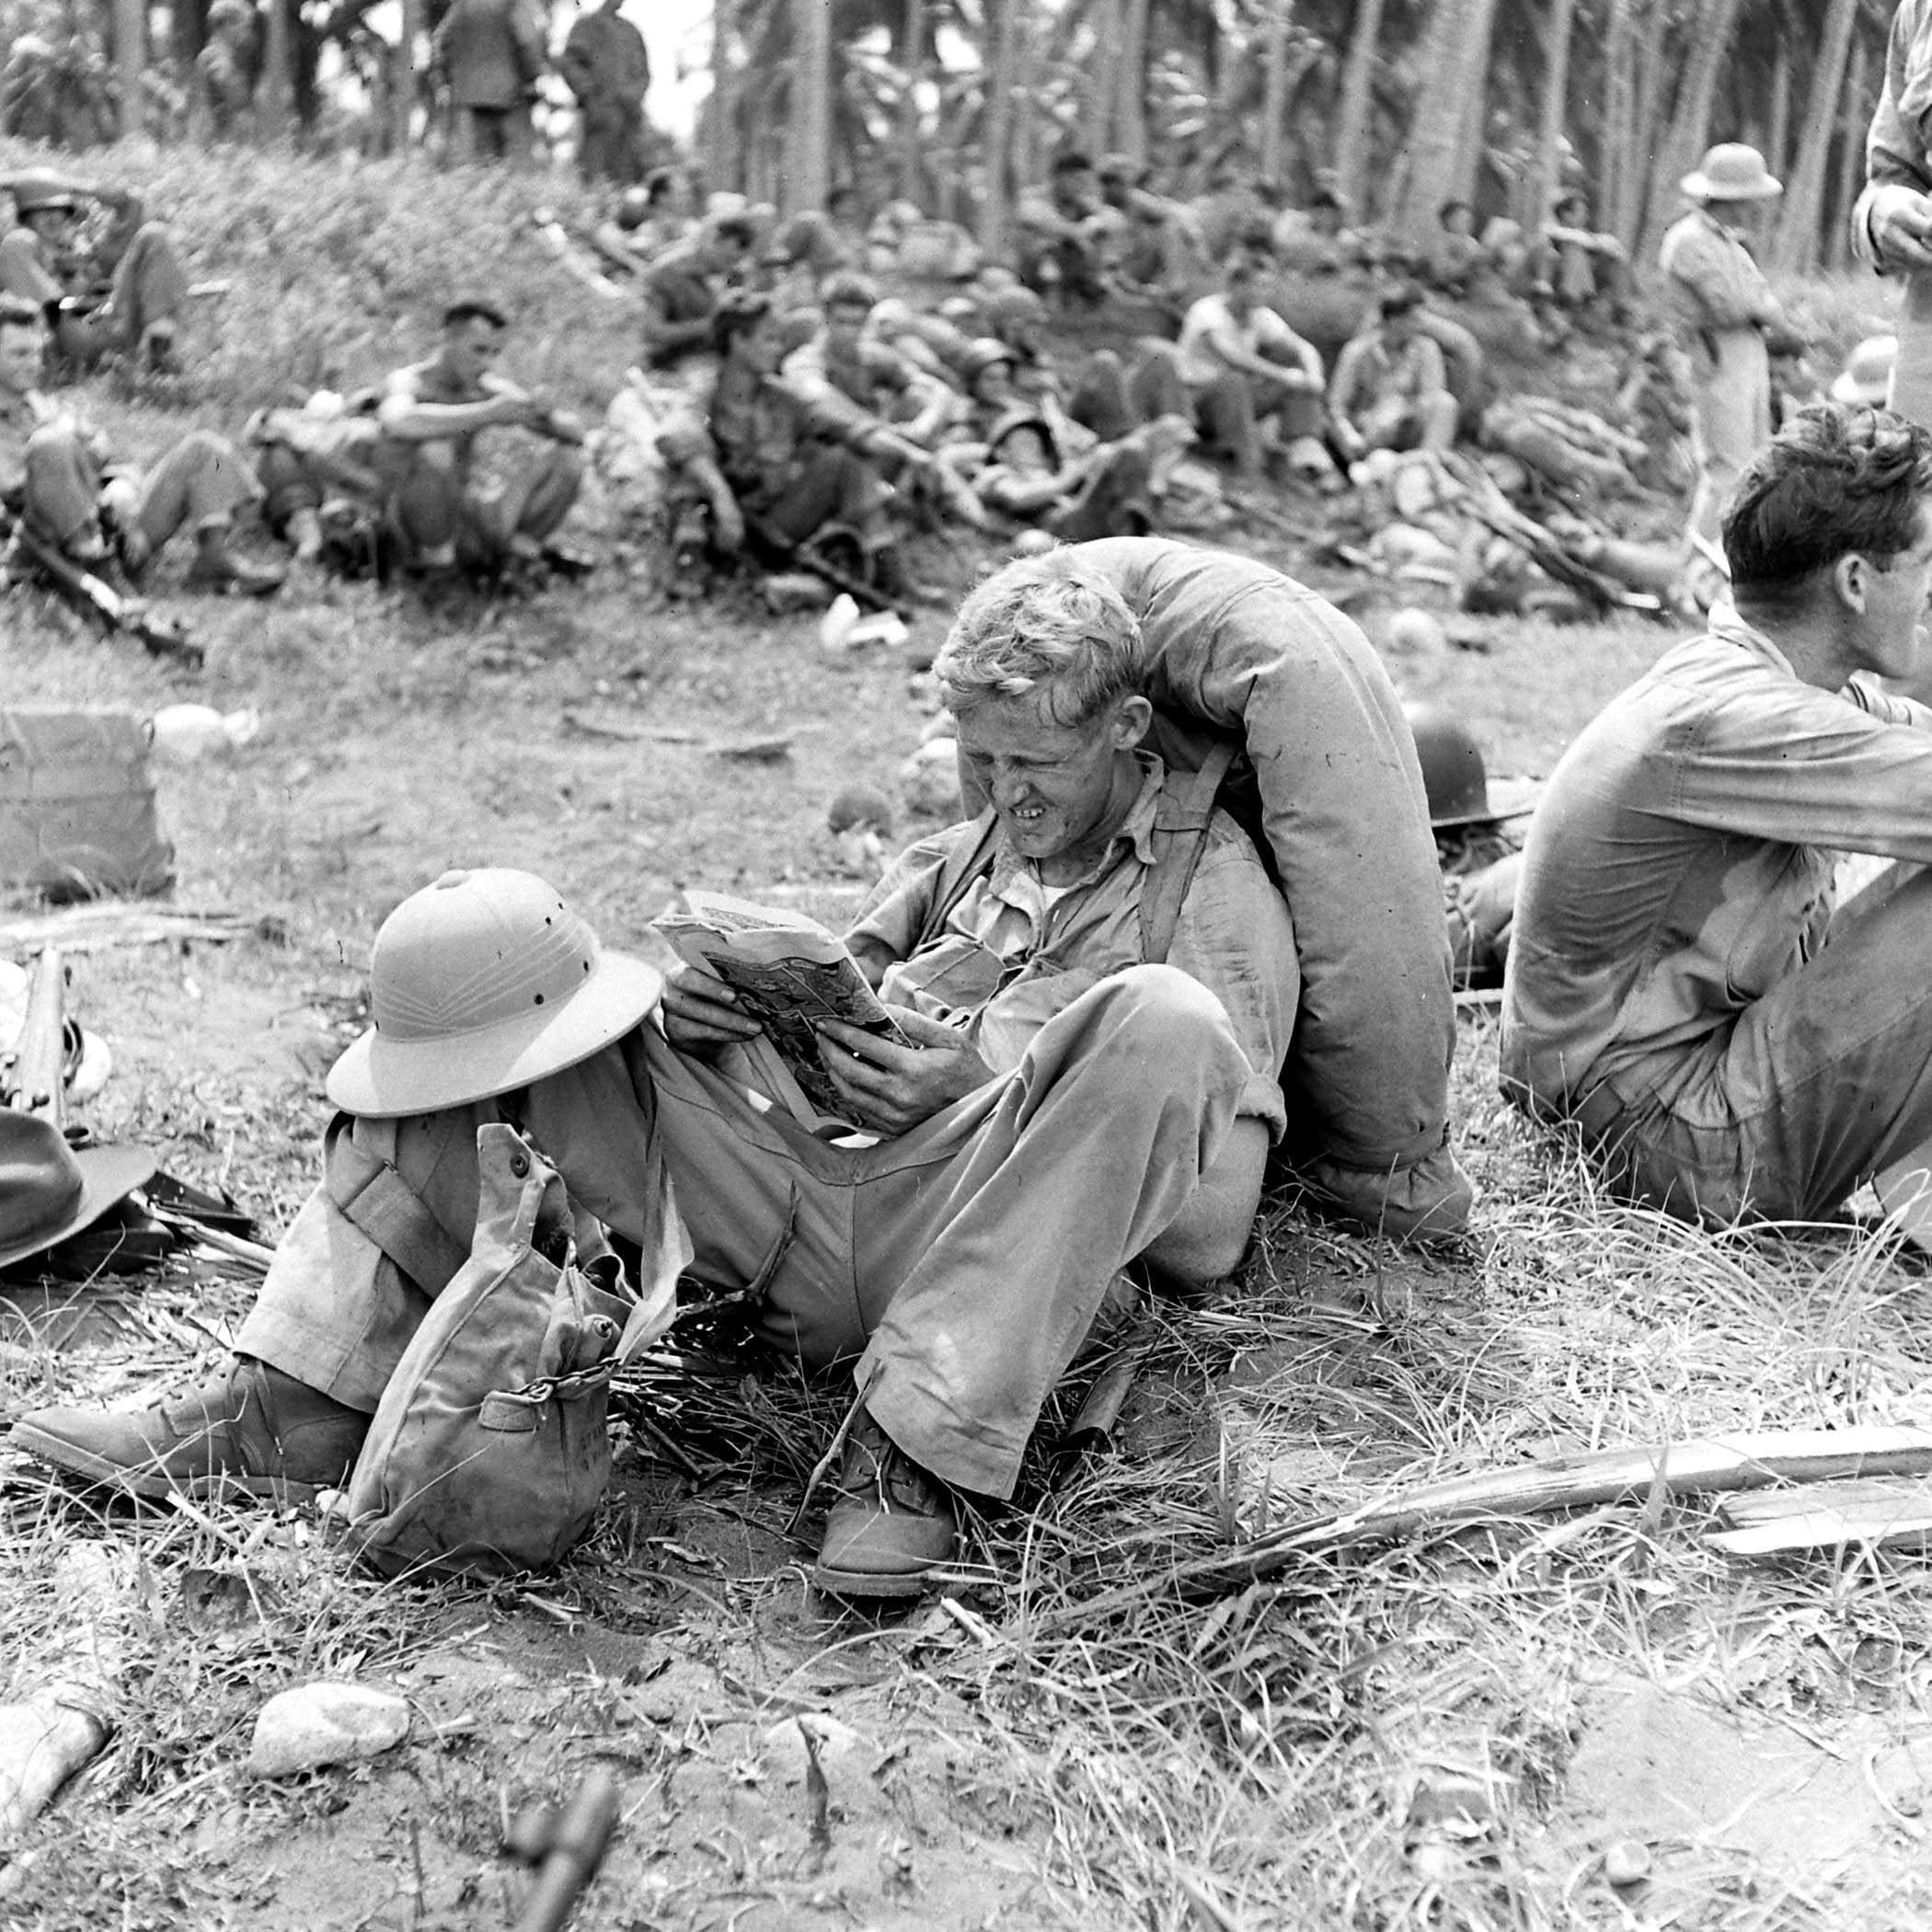 U.S. Marines, Guadalcanal, 1942.